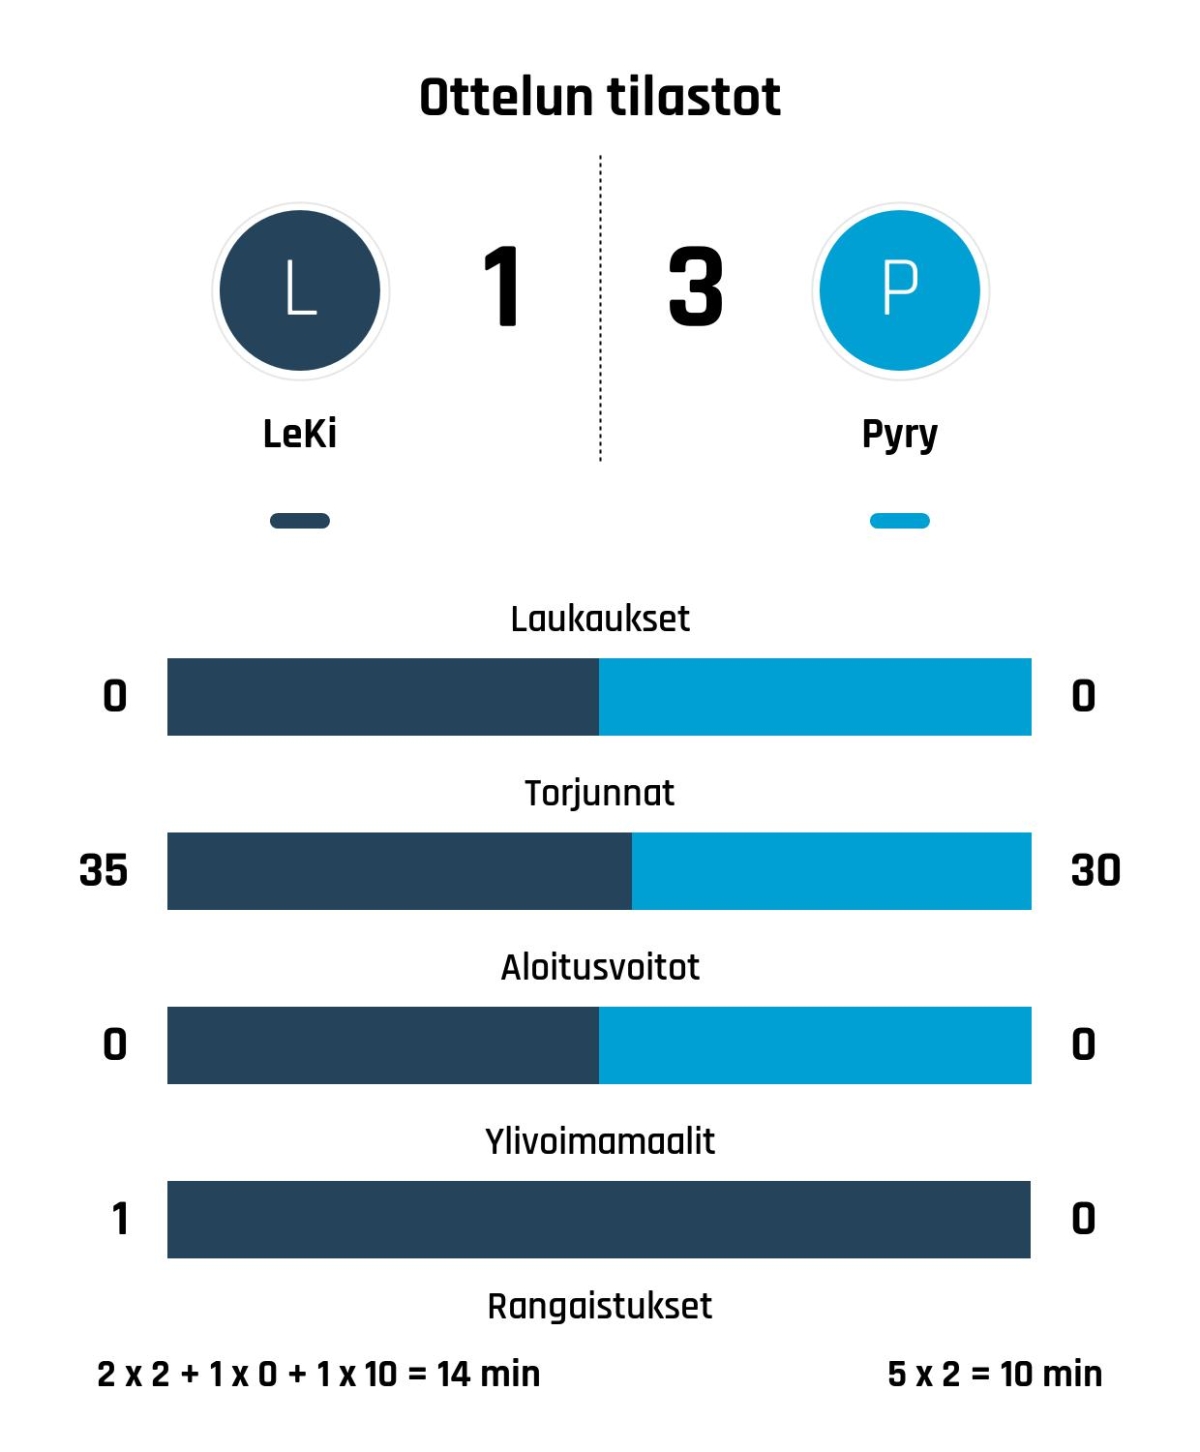 Pyry voitti LeKi:n 1-3